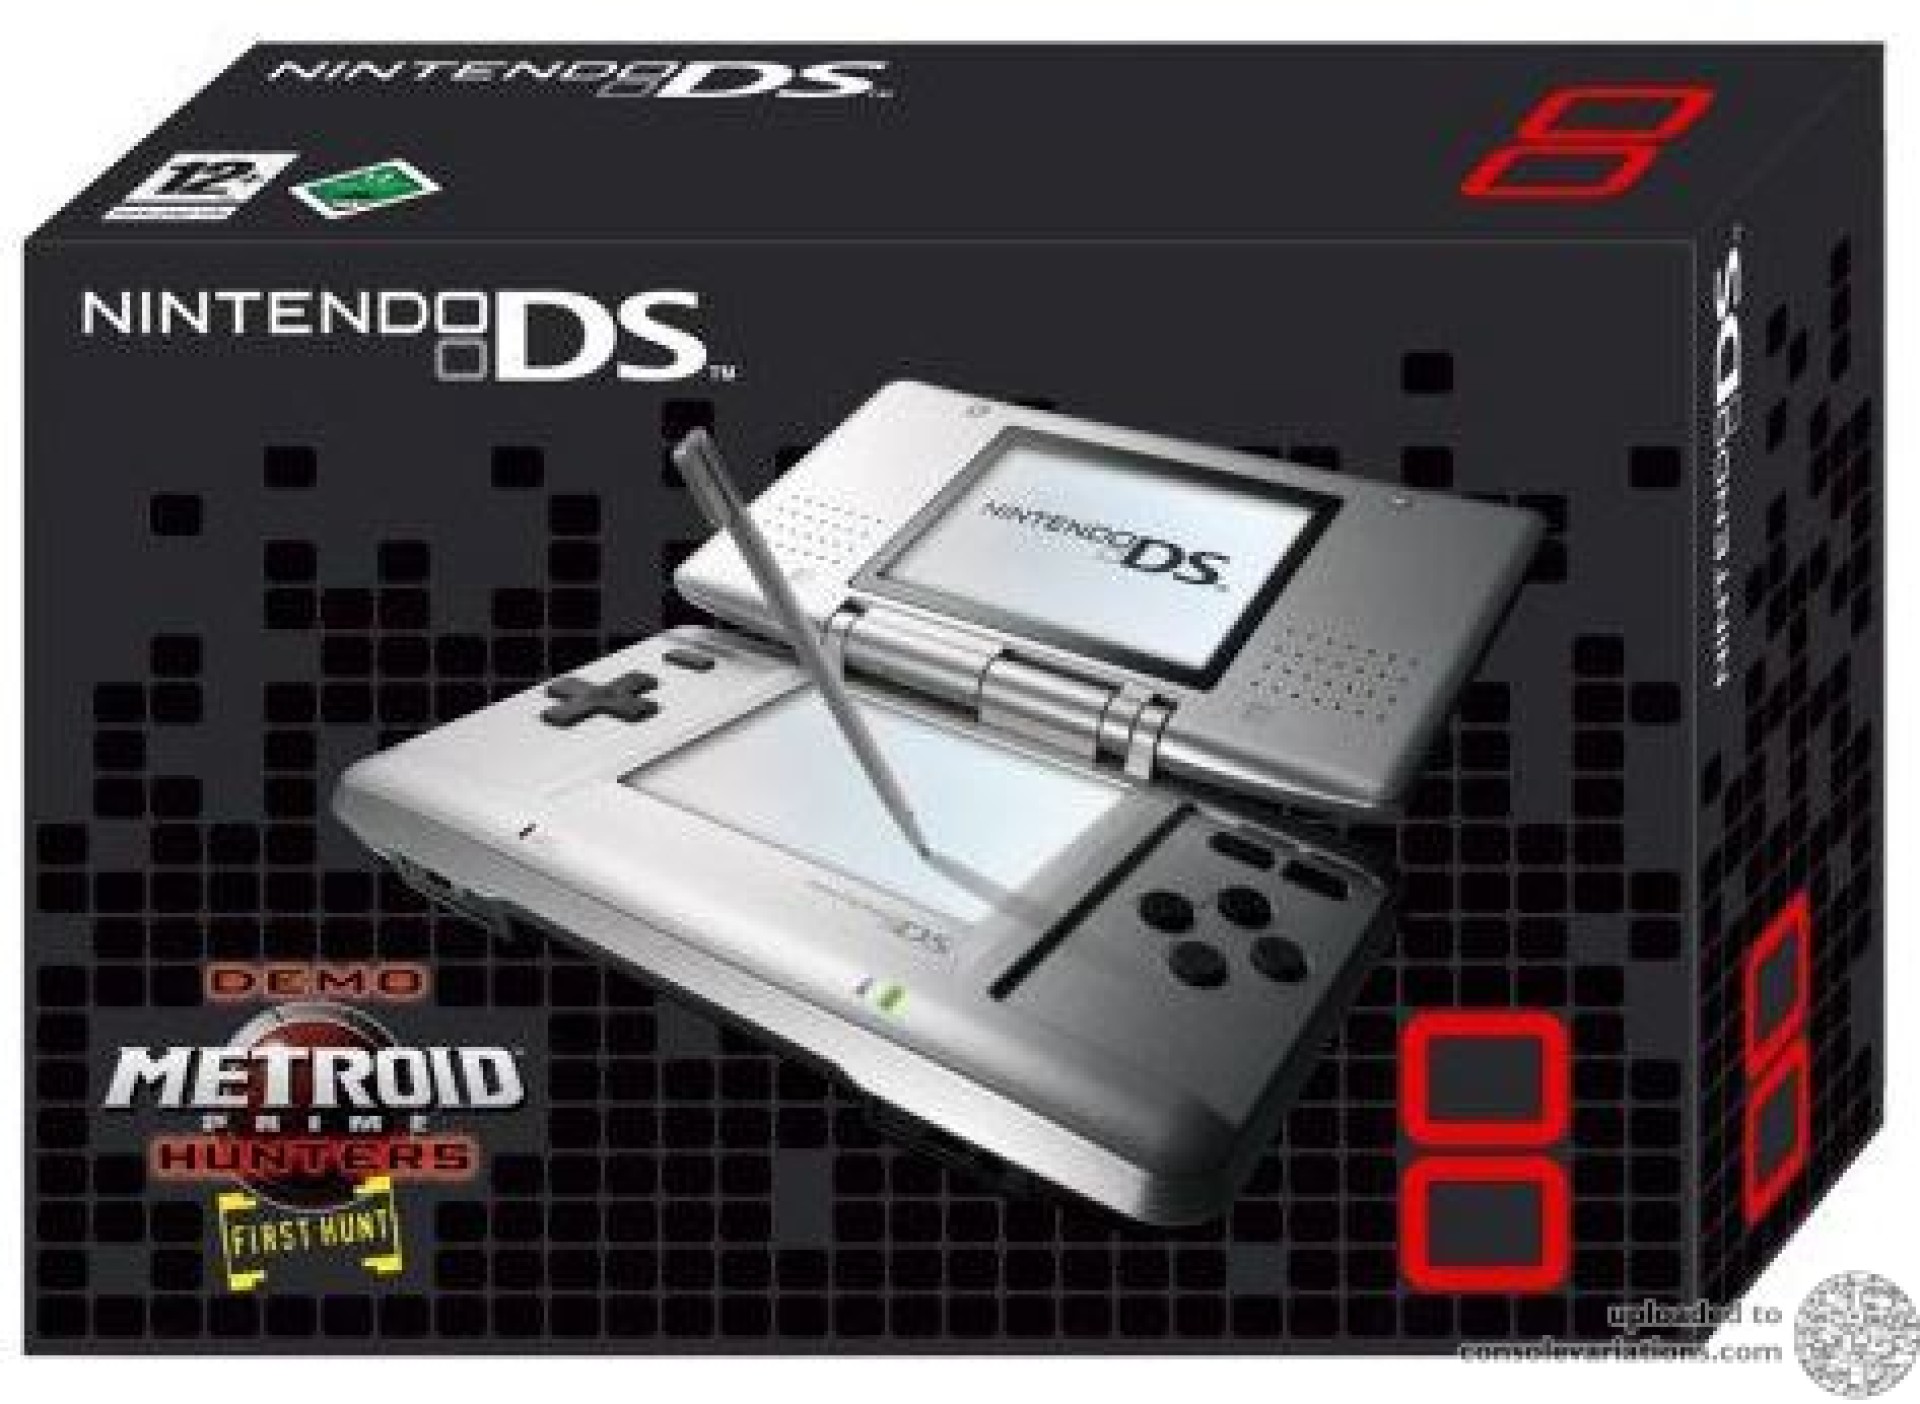 Nintendo DS Metroid Prime Hunters First Hunt Demo Edition (dobozos, pixelcsíkos kijelzőkkel)